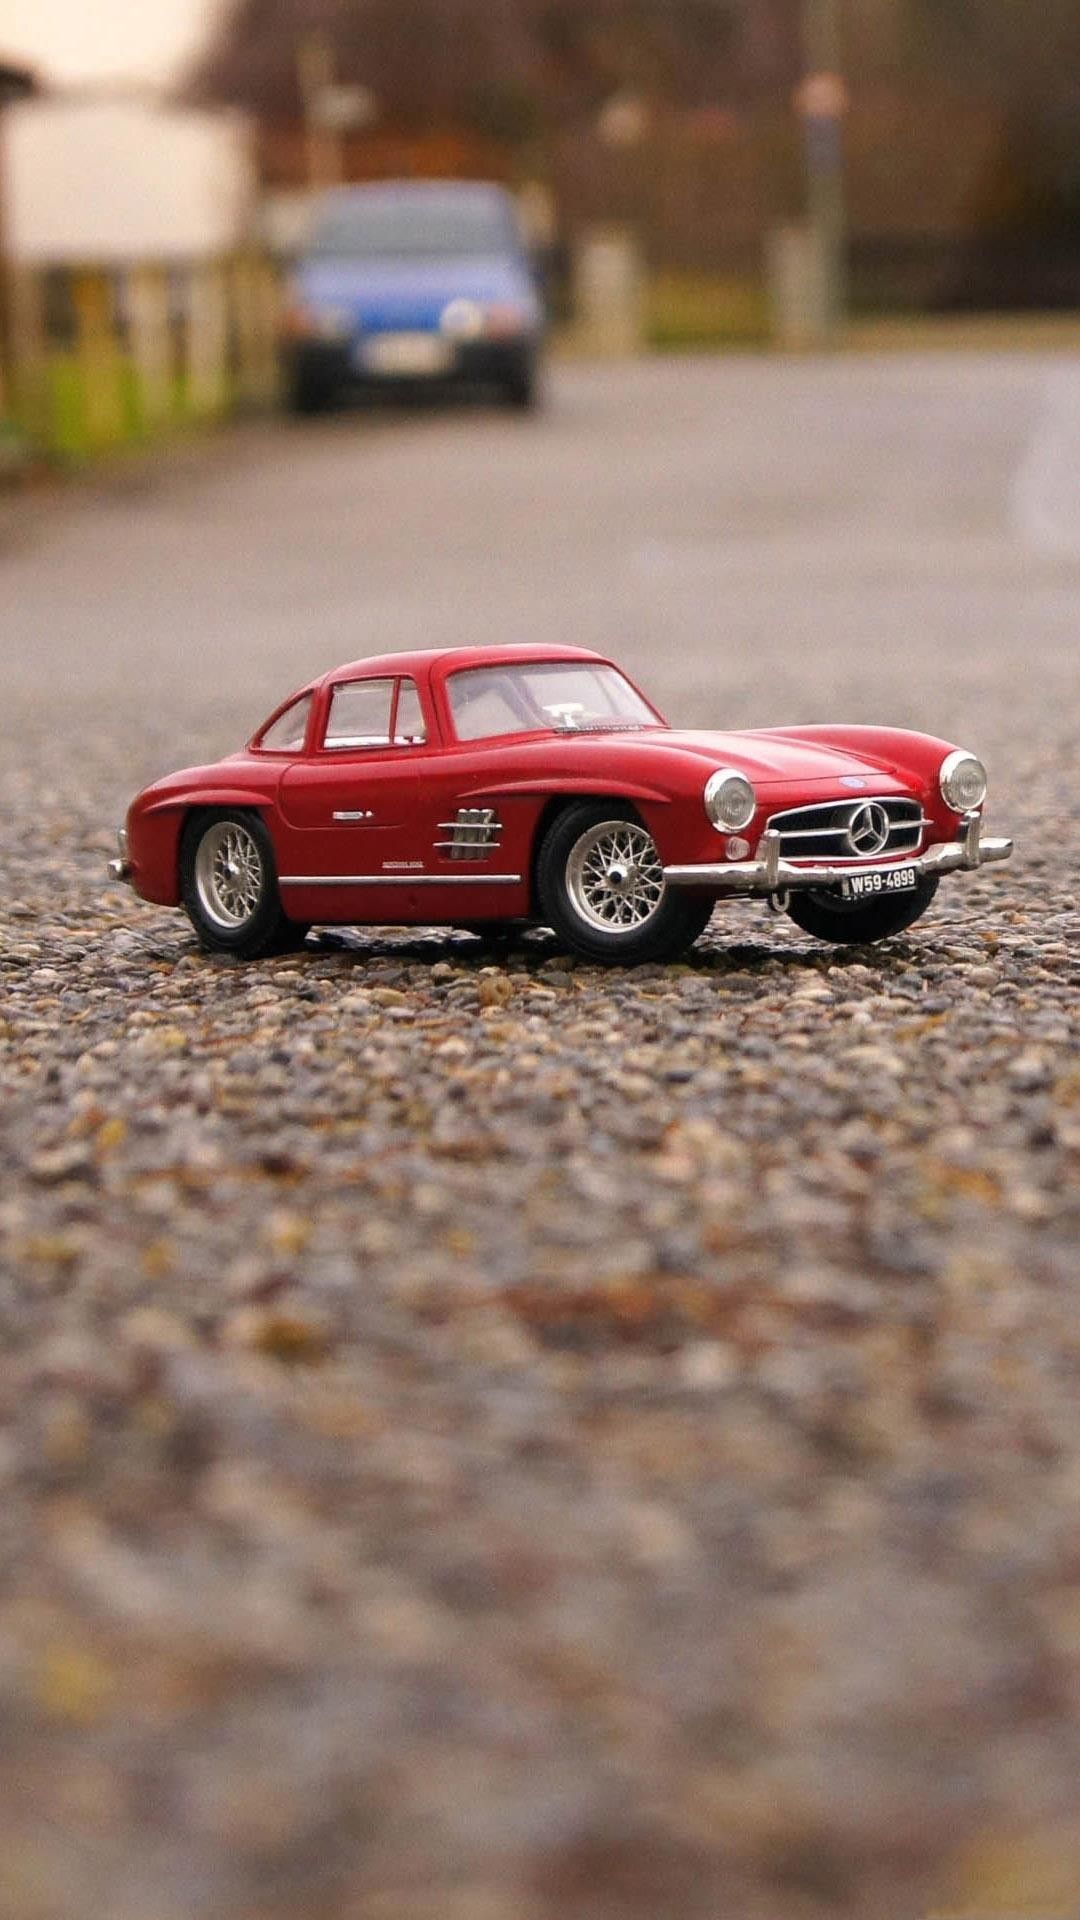 Vintage Mercedes Toy Car HD Wallpaper For Mobile